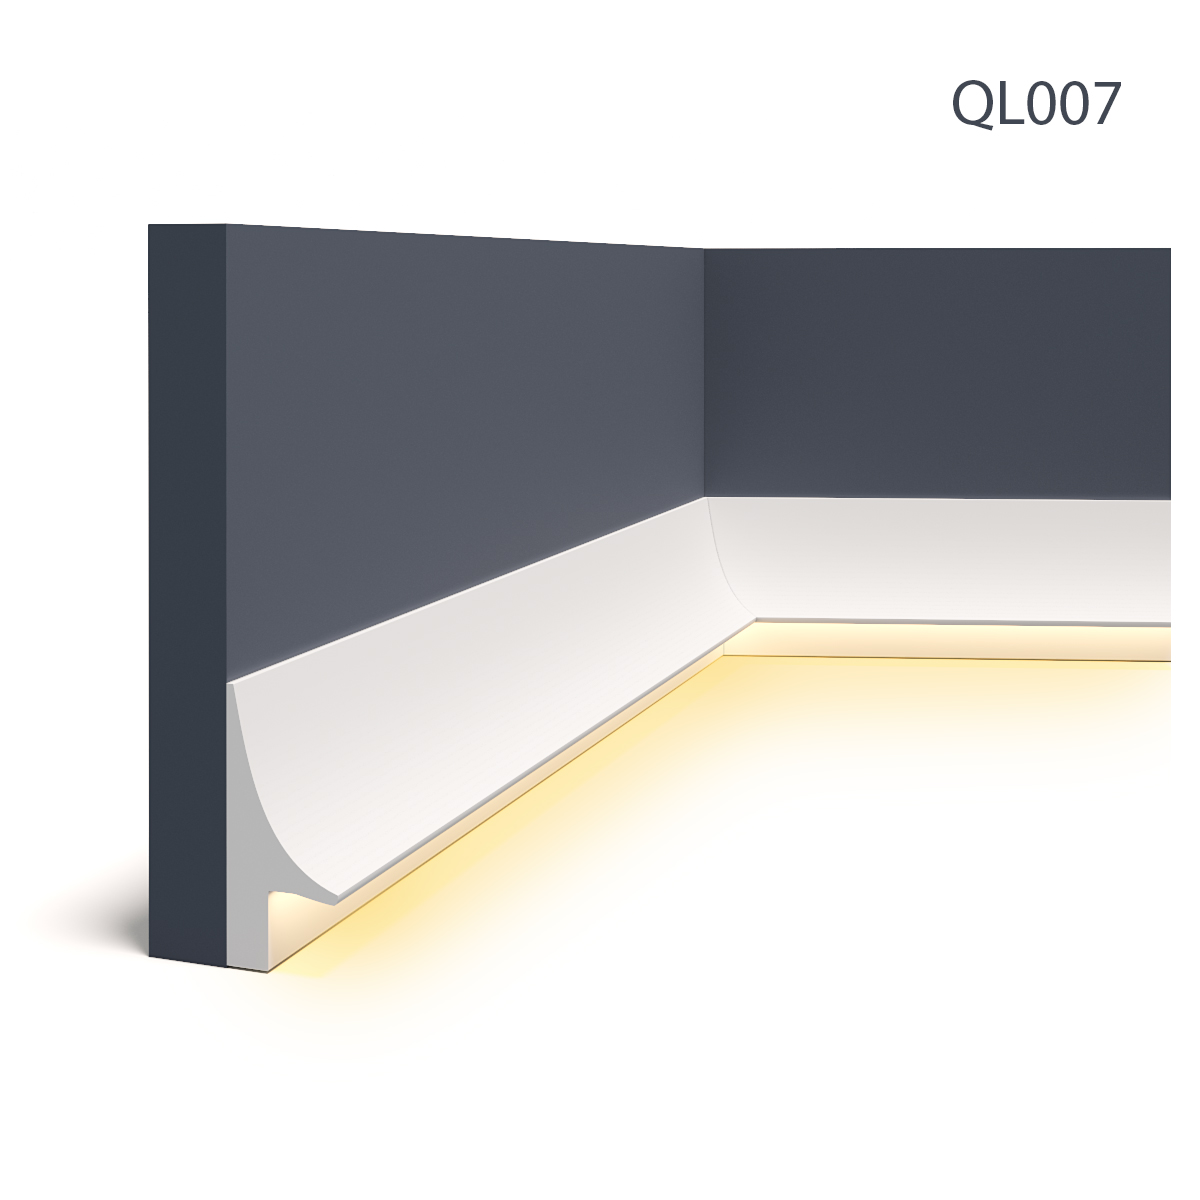 Plinta decorativa pentru led ql007, 200 x 9.3 x 4 cm, mardom decor 